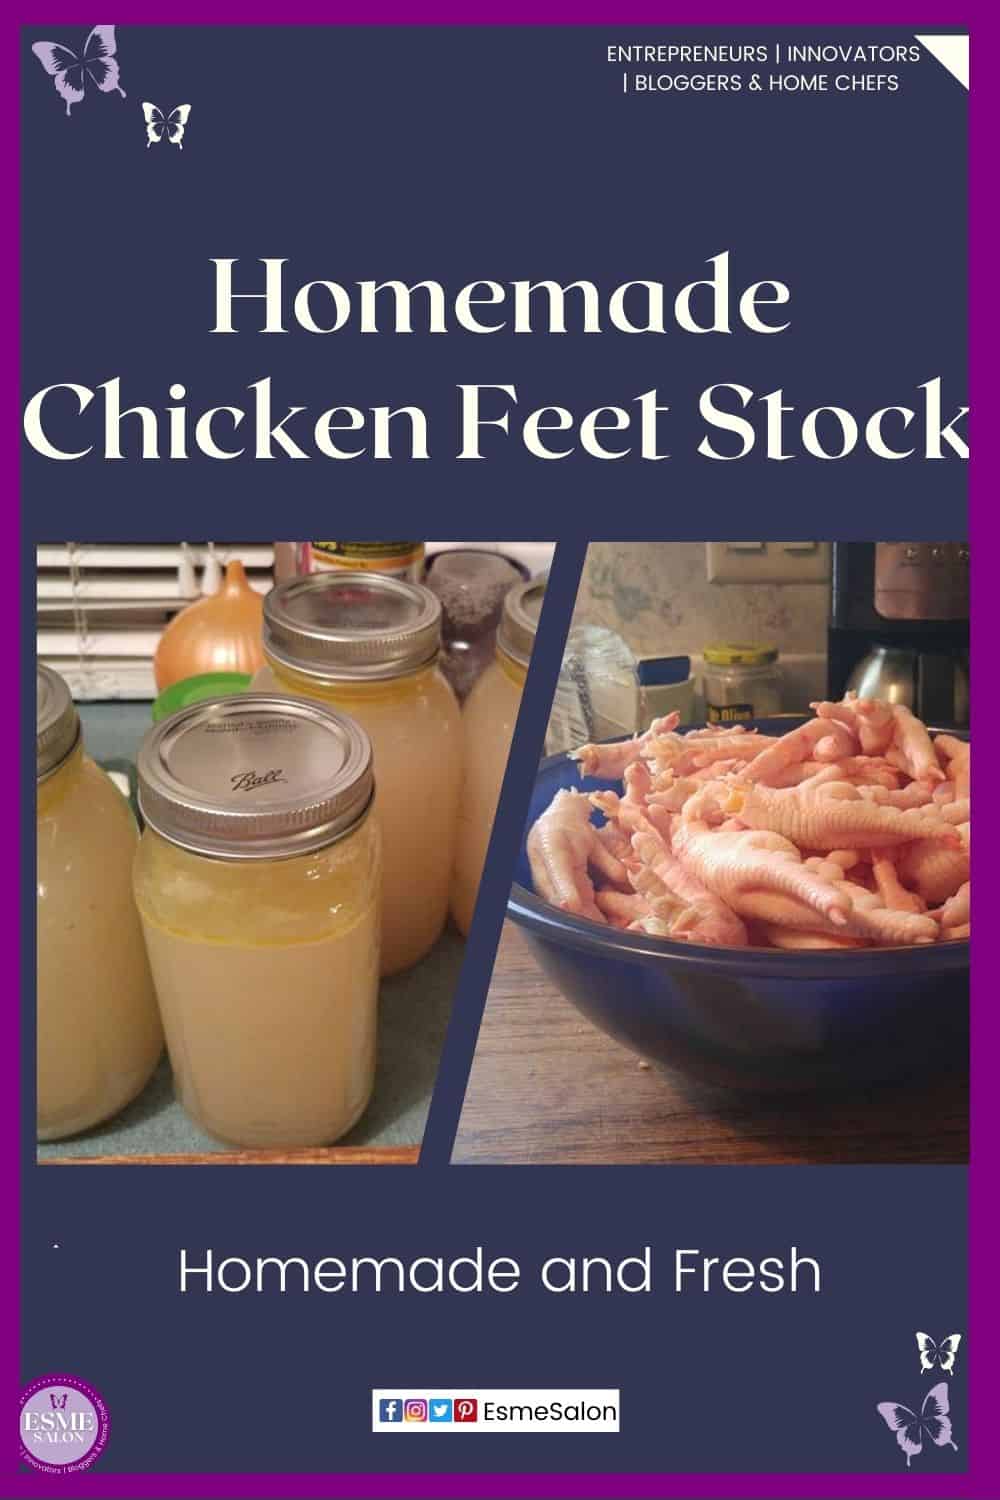 an image of fresh chicken feet and bottled Homemade Chicken Feet Stock